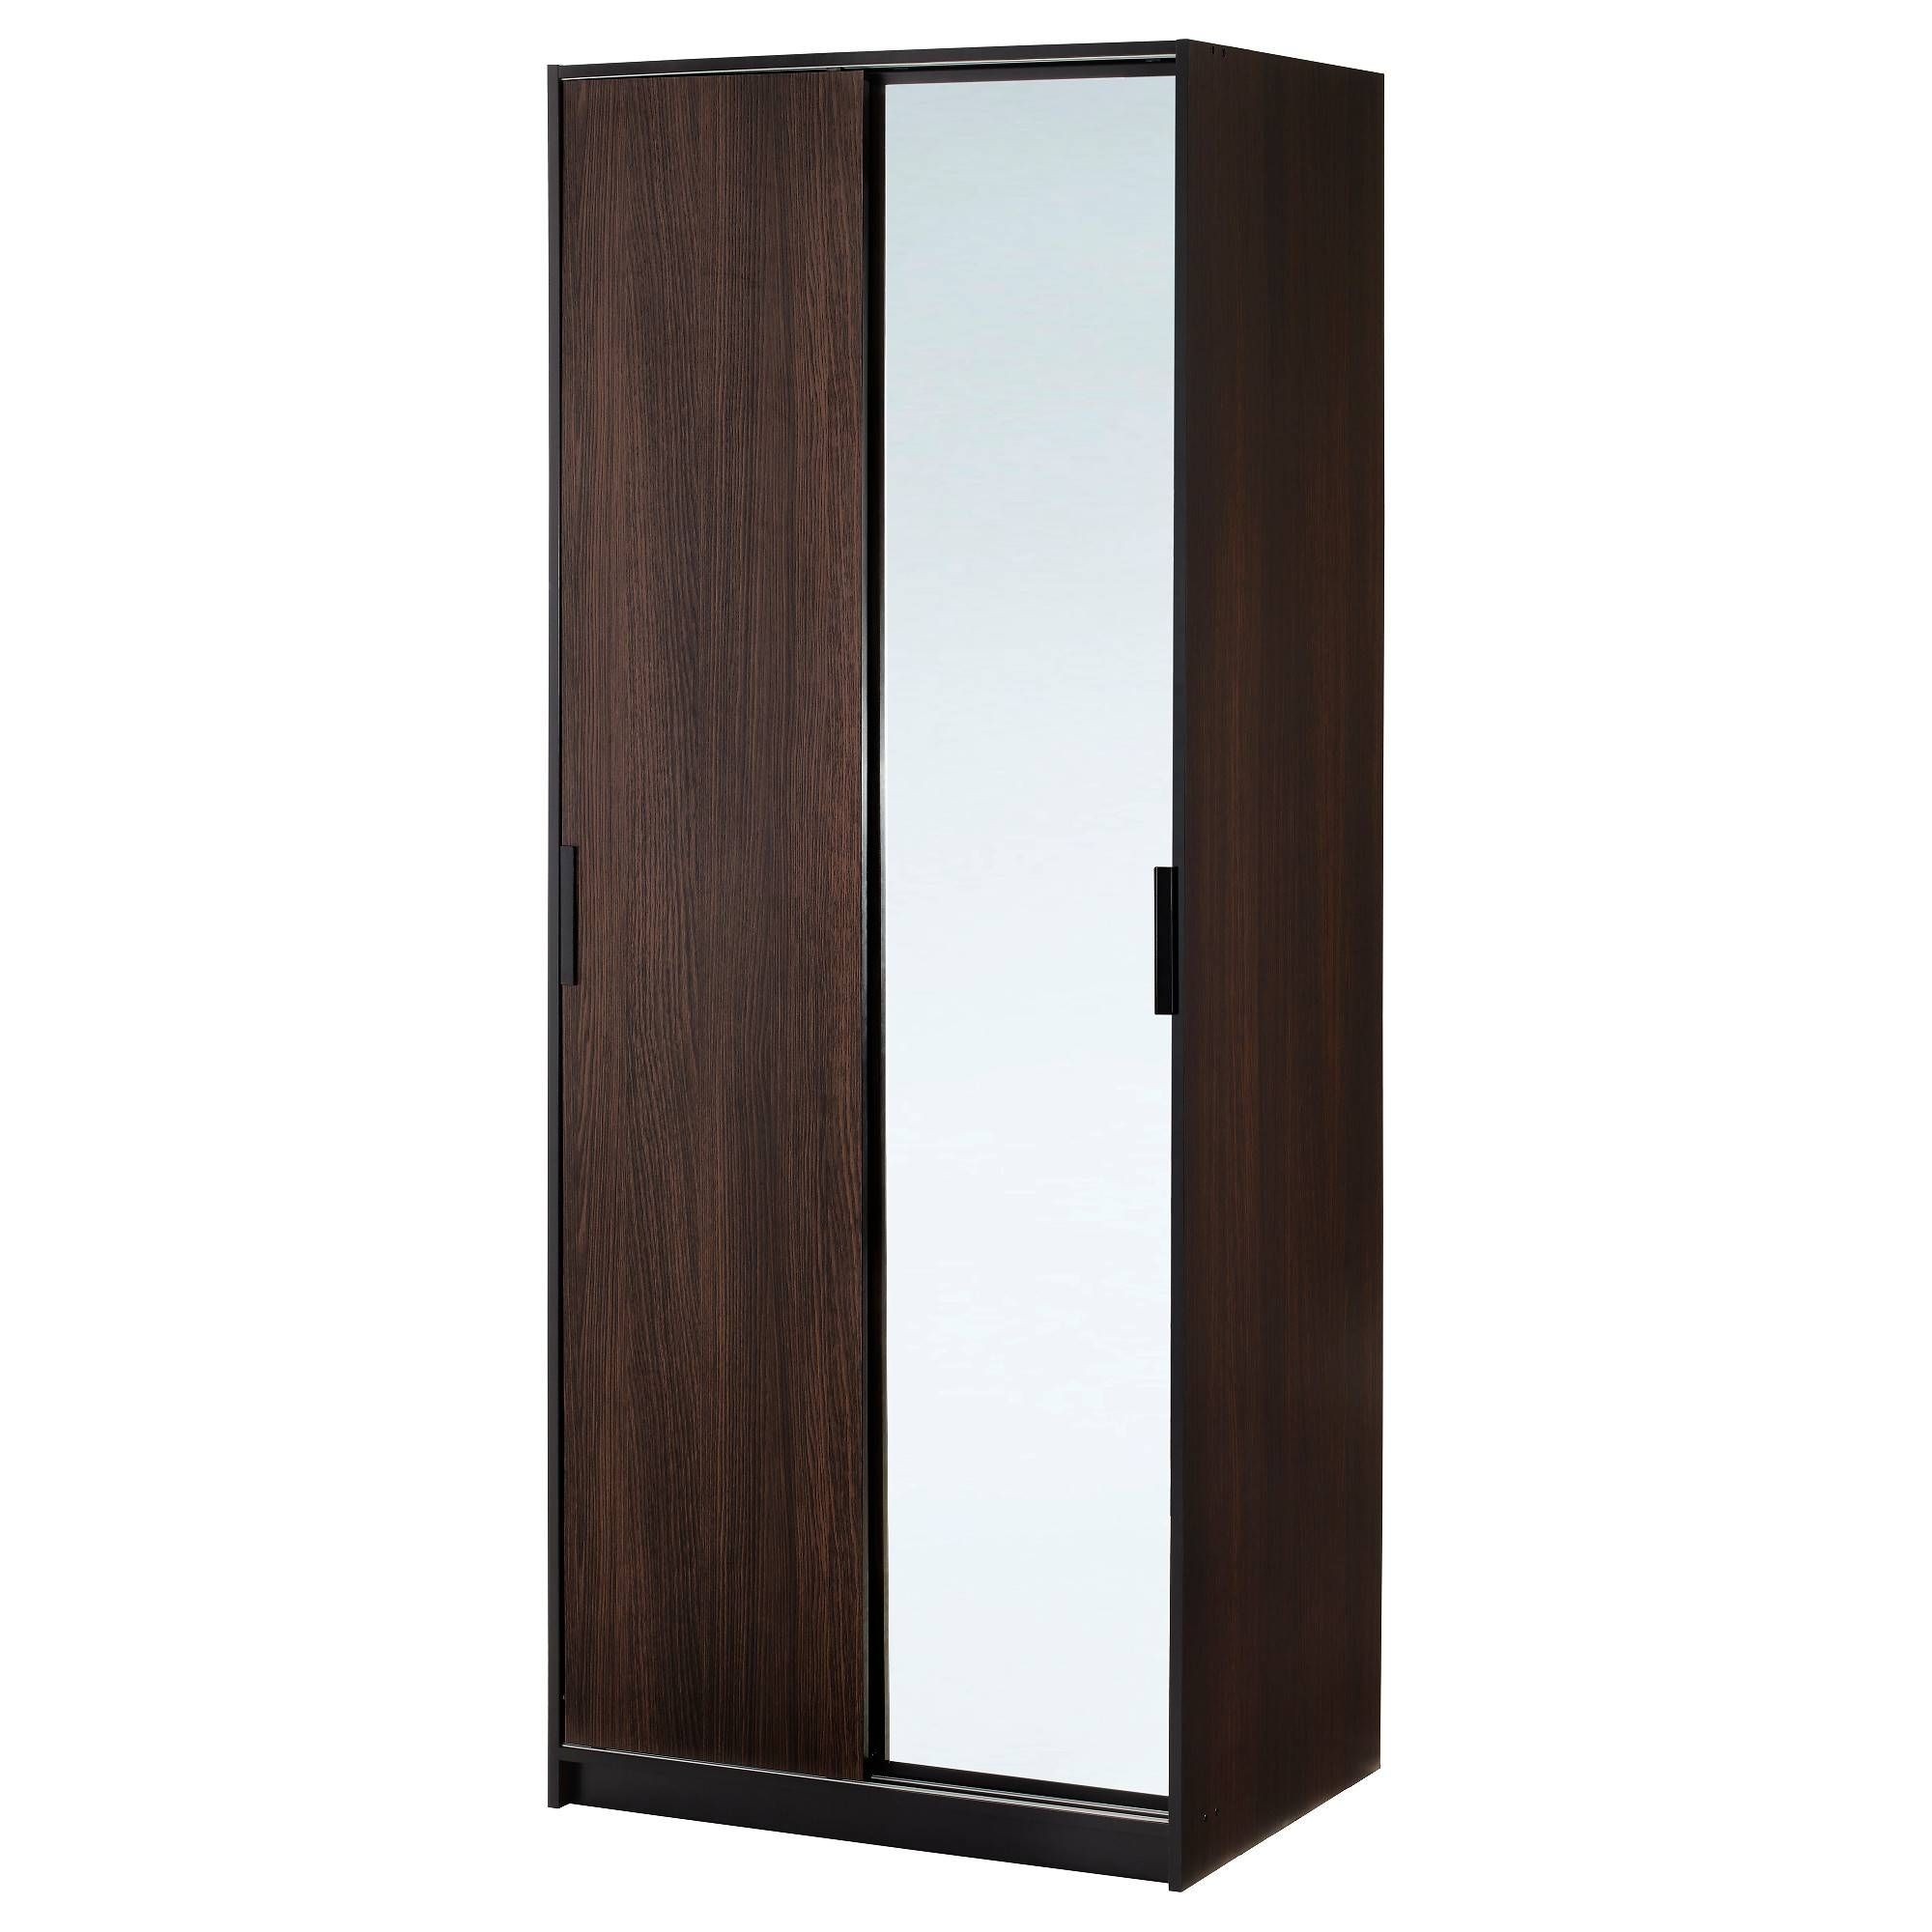 Trysil Wardrobe Dark Brown/mirror Glass 79x61x202 Cm – Ikea Throughout Dark Wood Wardrobes Ikea (View 6 of 30)